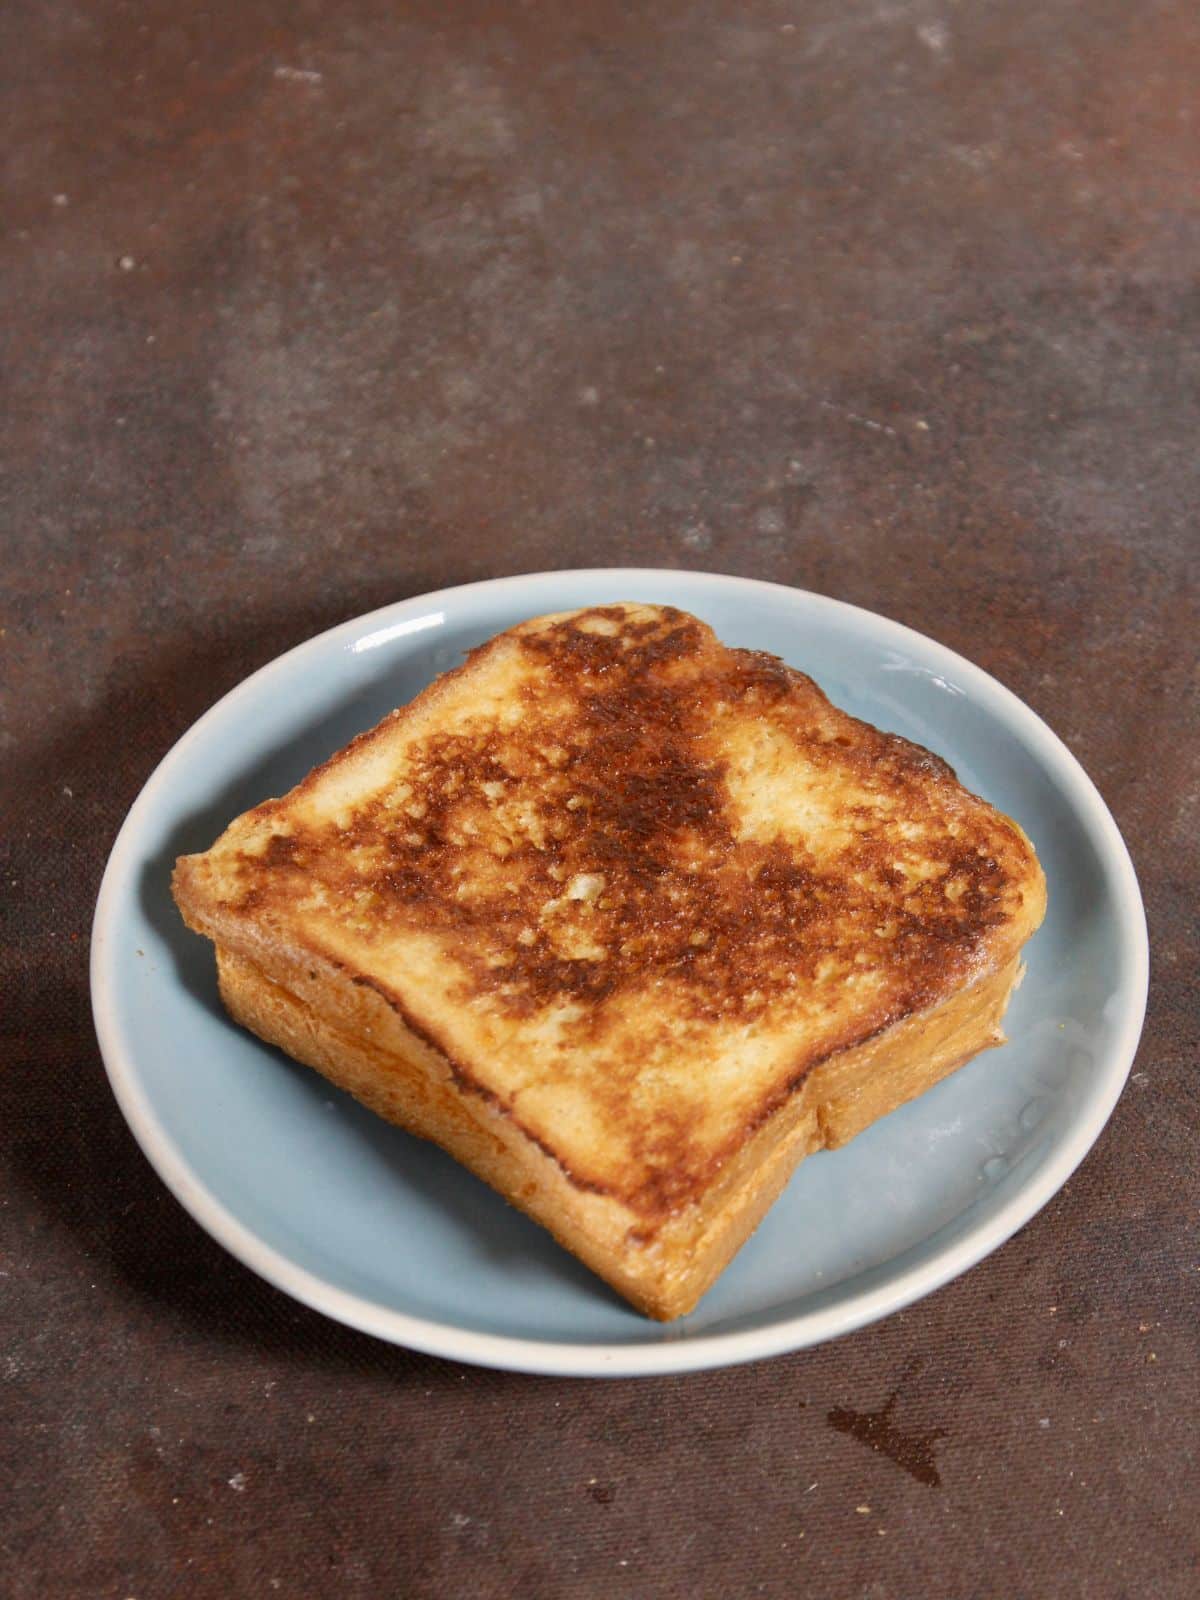 enjoy yummy French toast in your breakfast